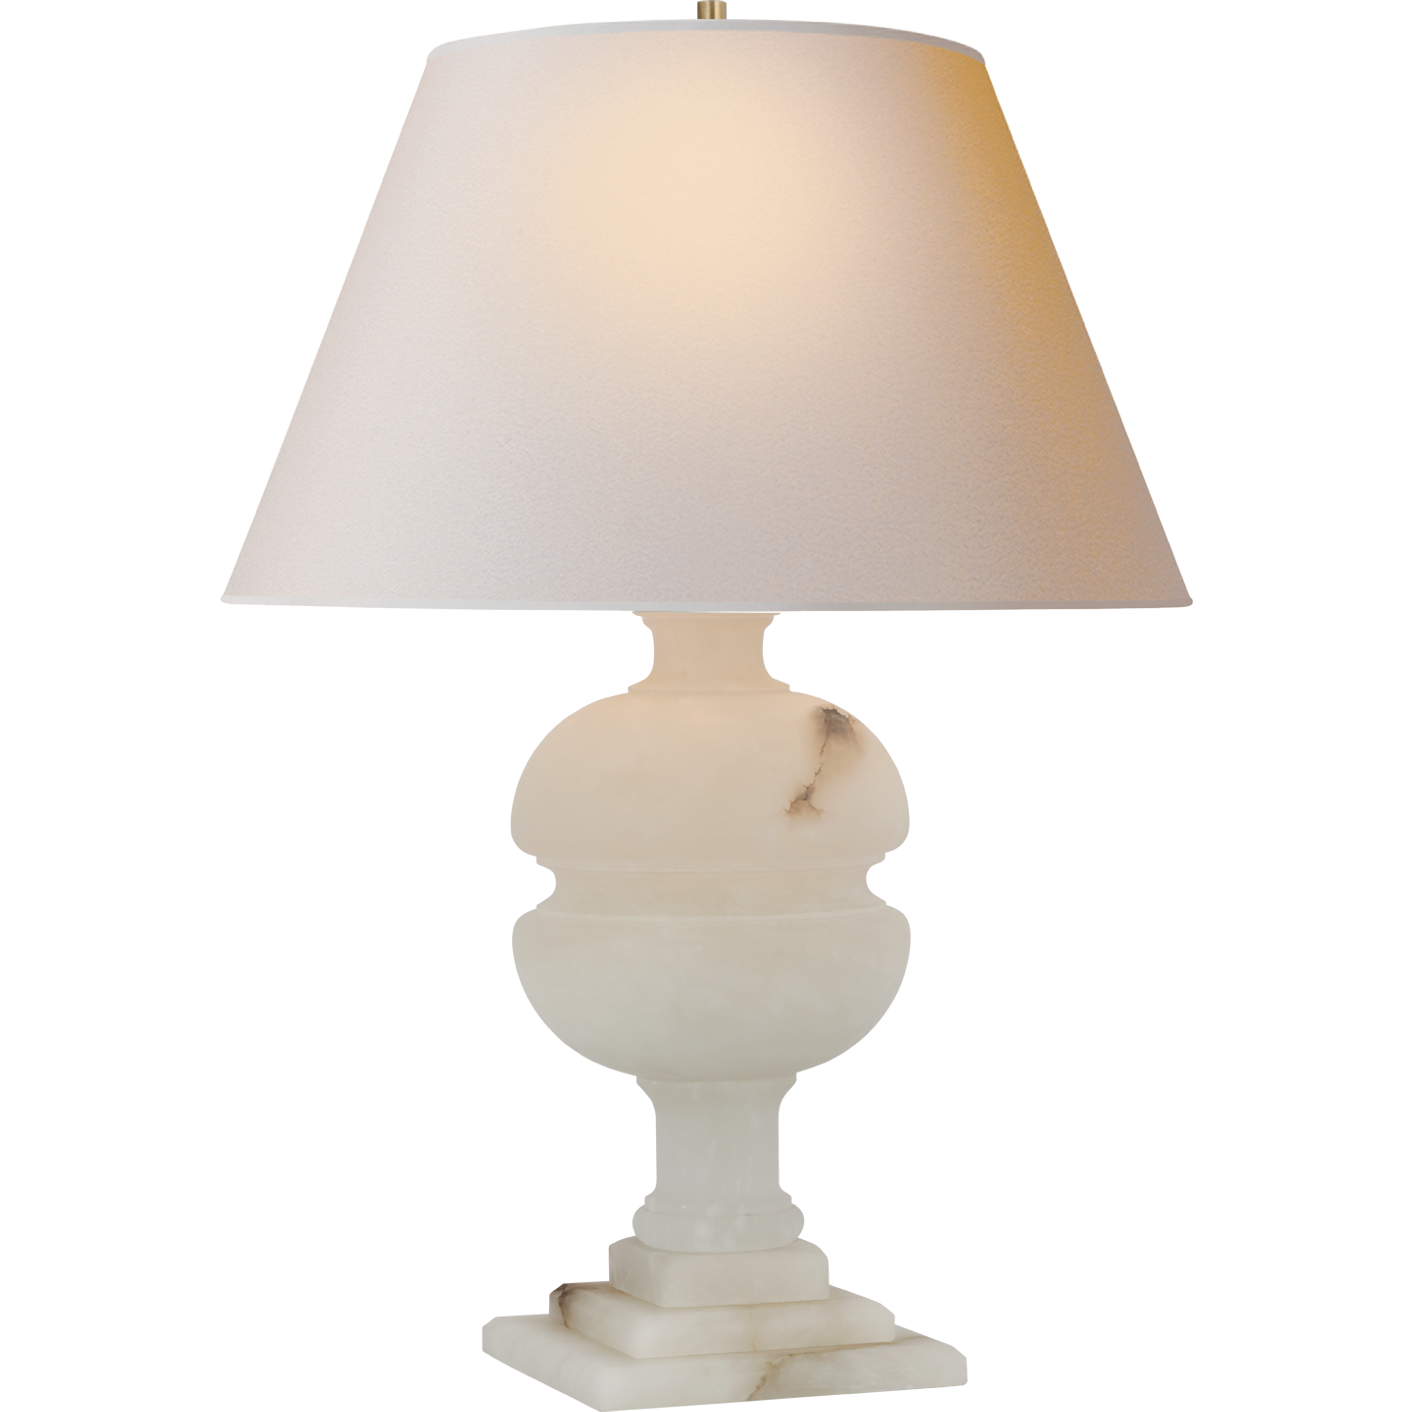 Desmond Table Lamp